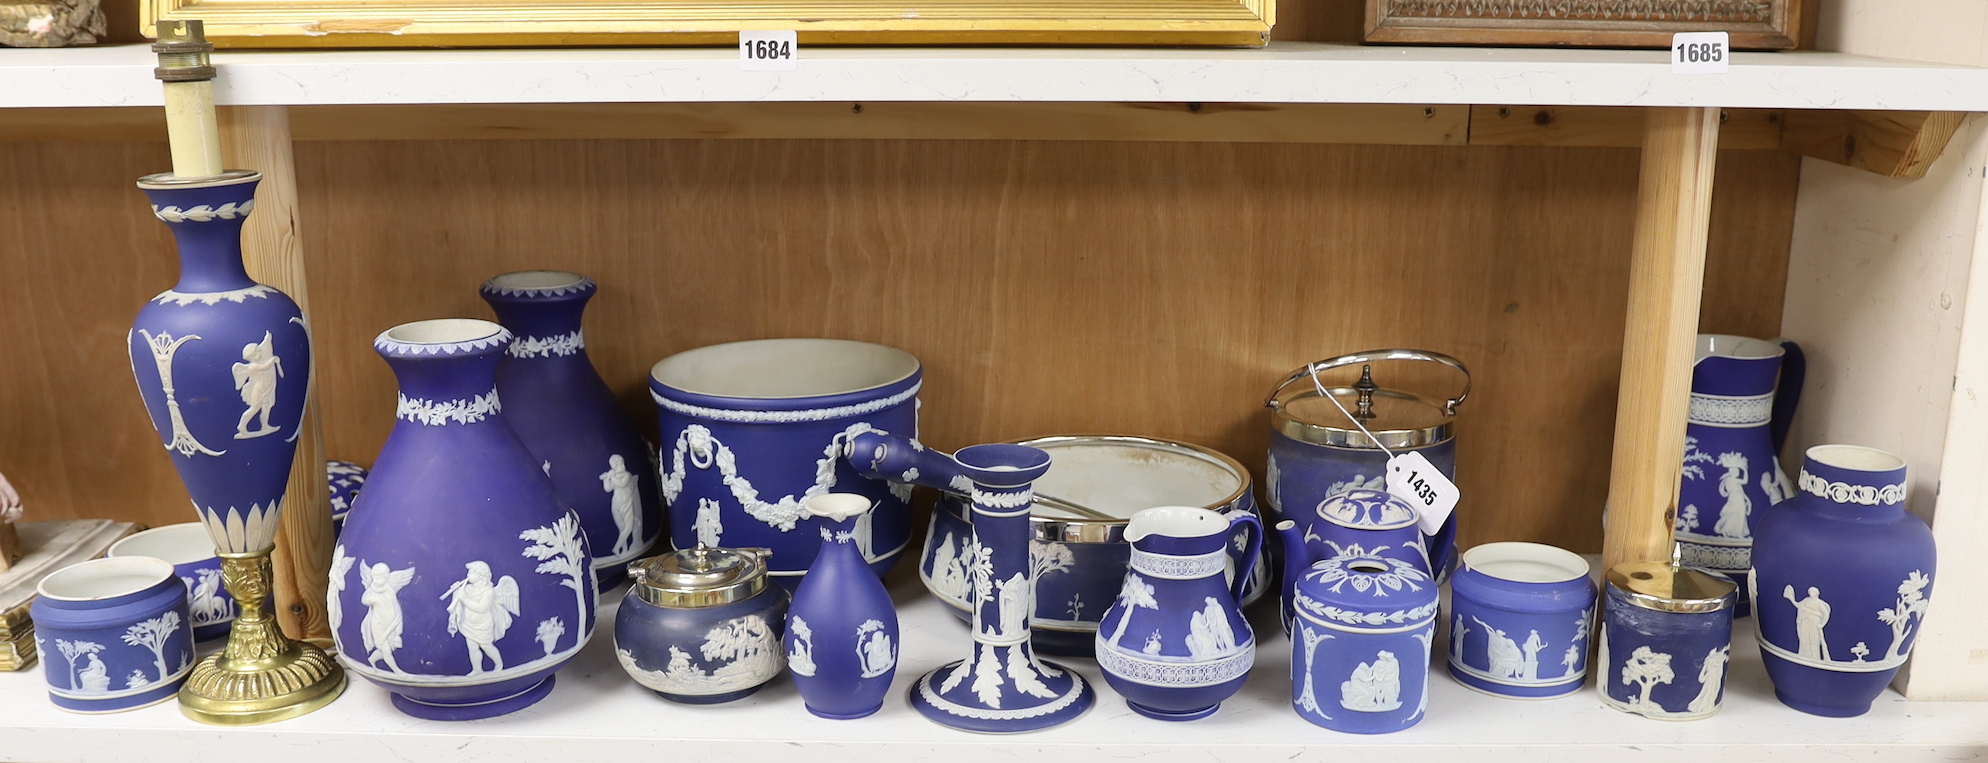 Wedgwood blue Jasper: a pair of vases, salad bowl and servers, jardiniere, biscuit barrel, table lamp, etc. (21 total)